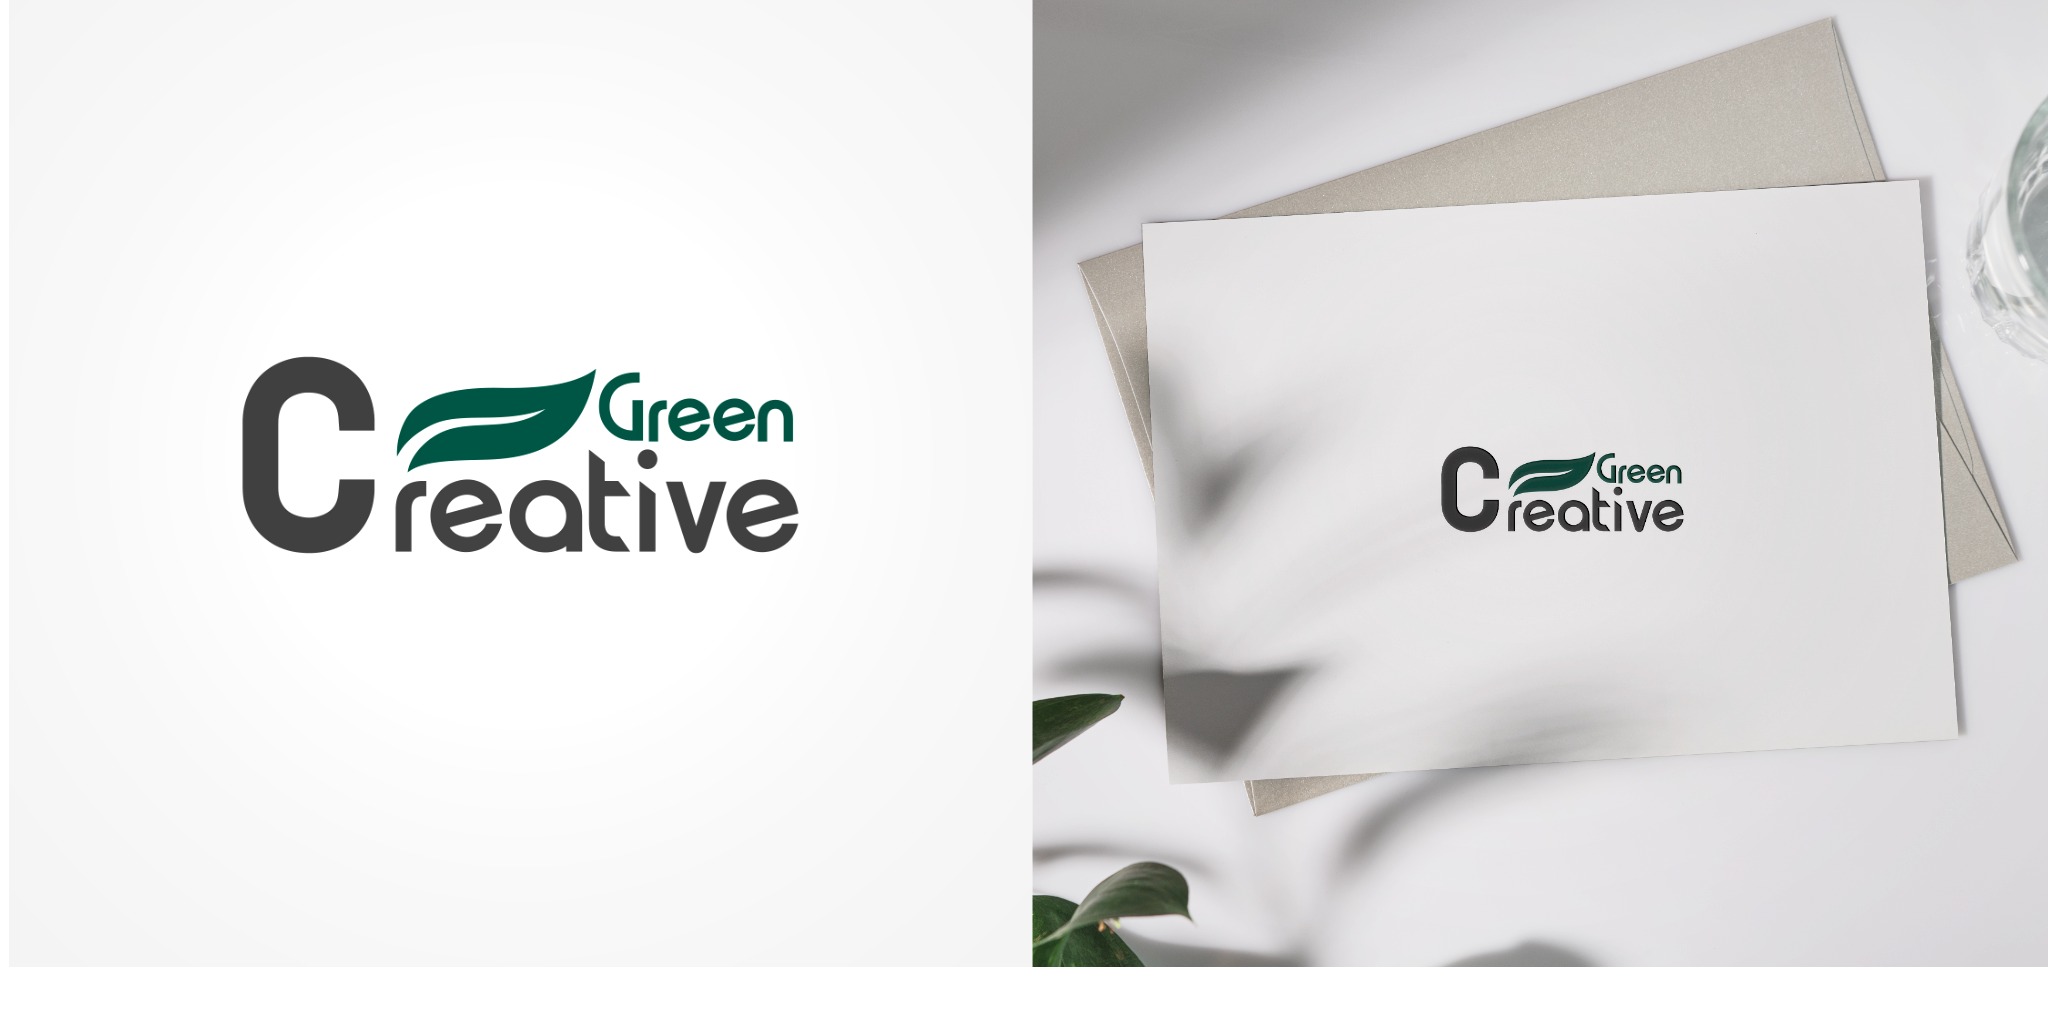 greencreative